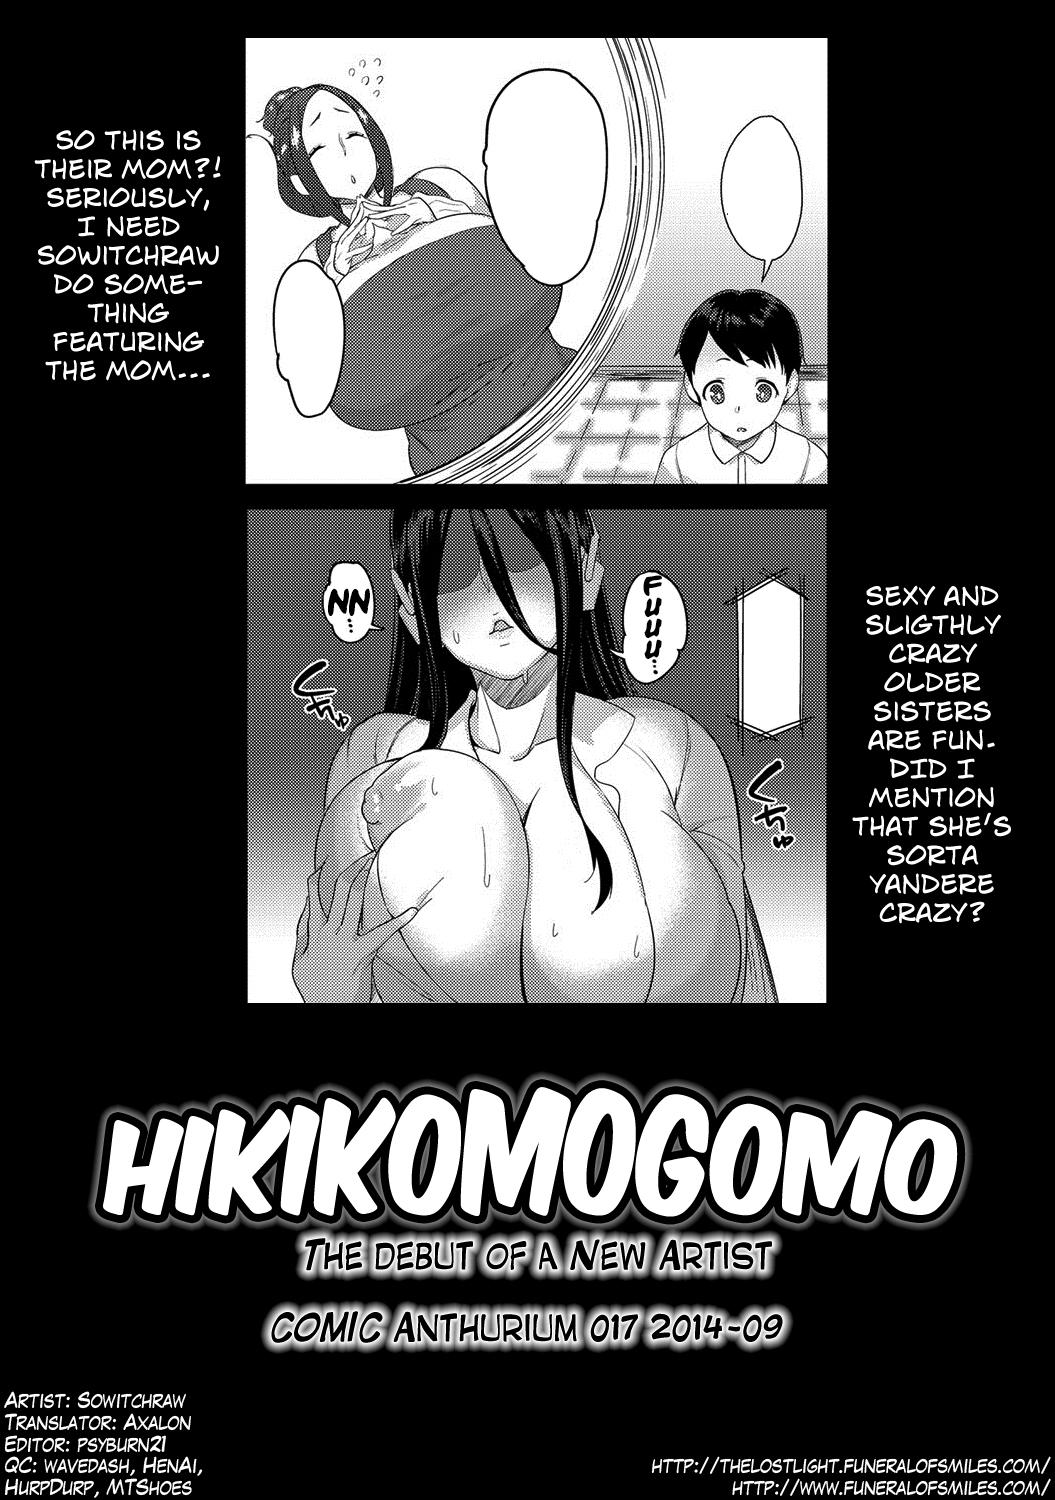 Hikikomogomo 20